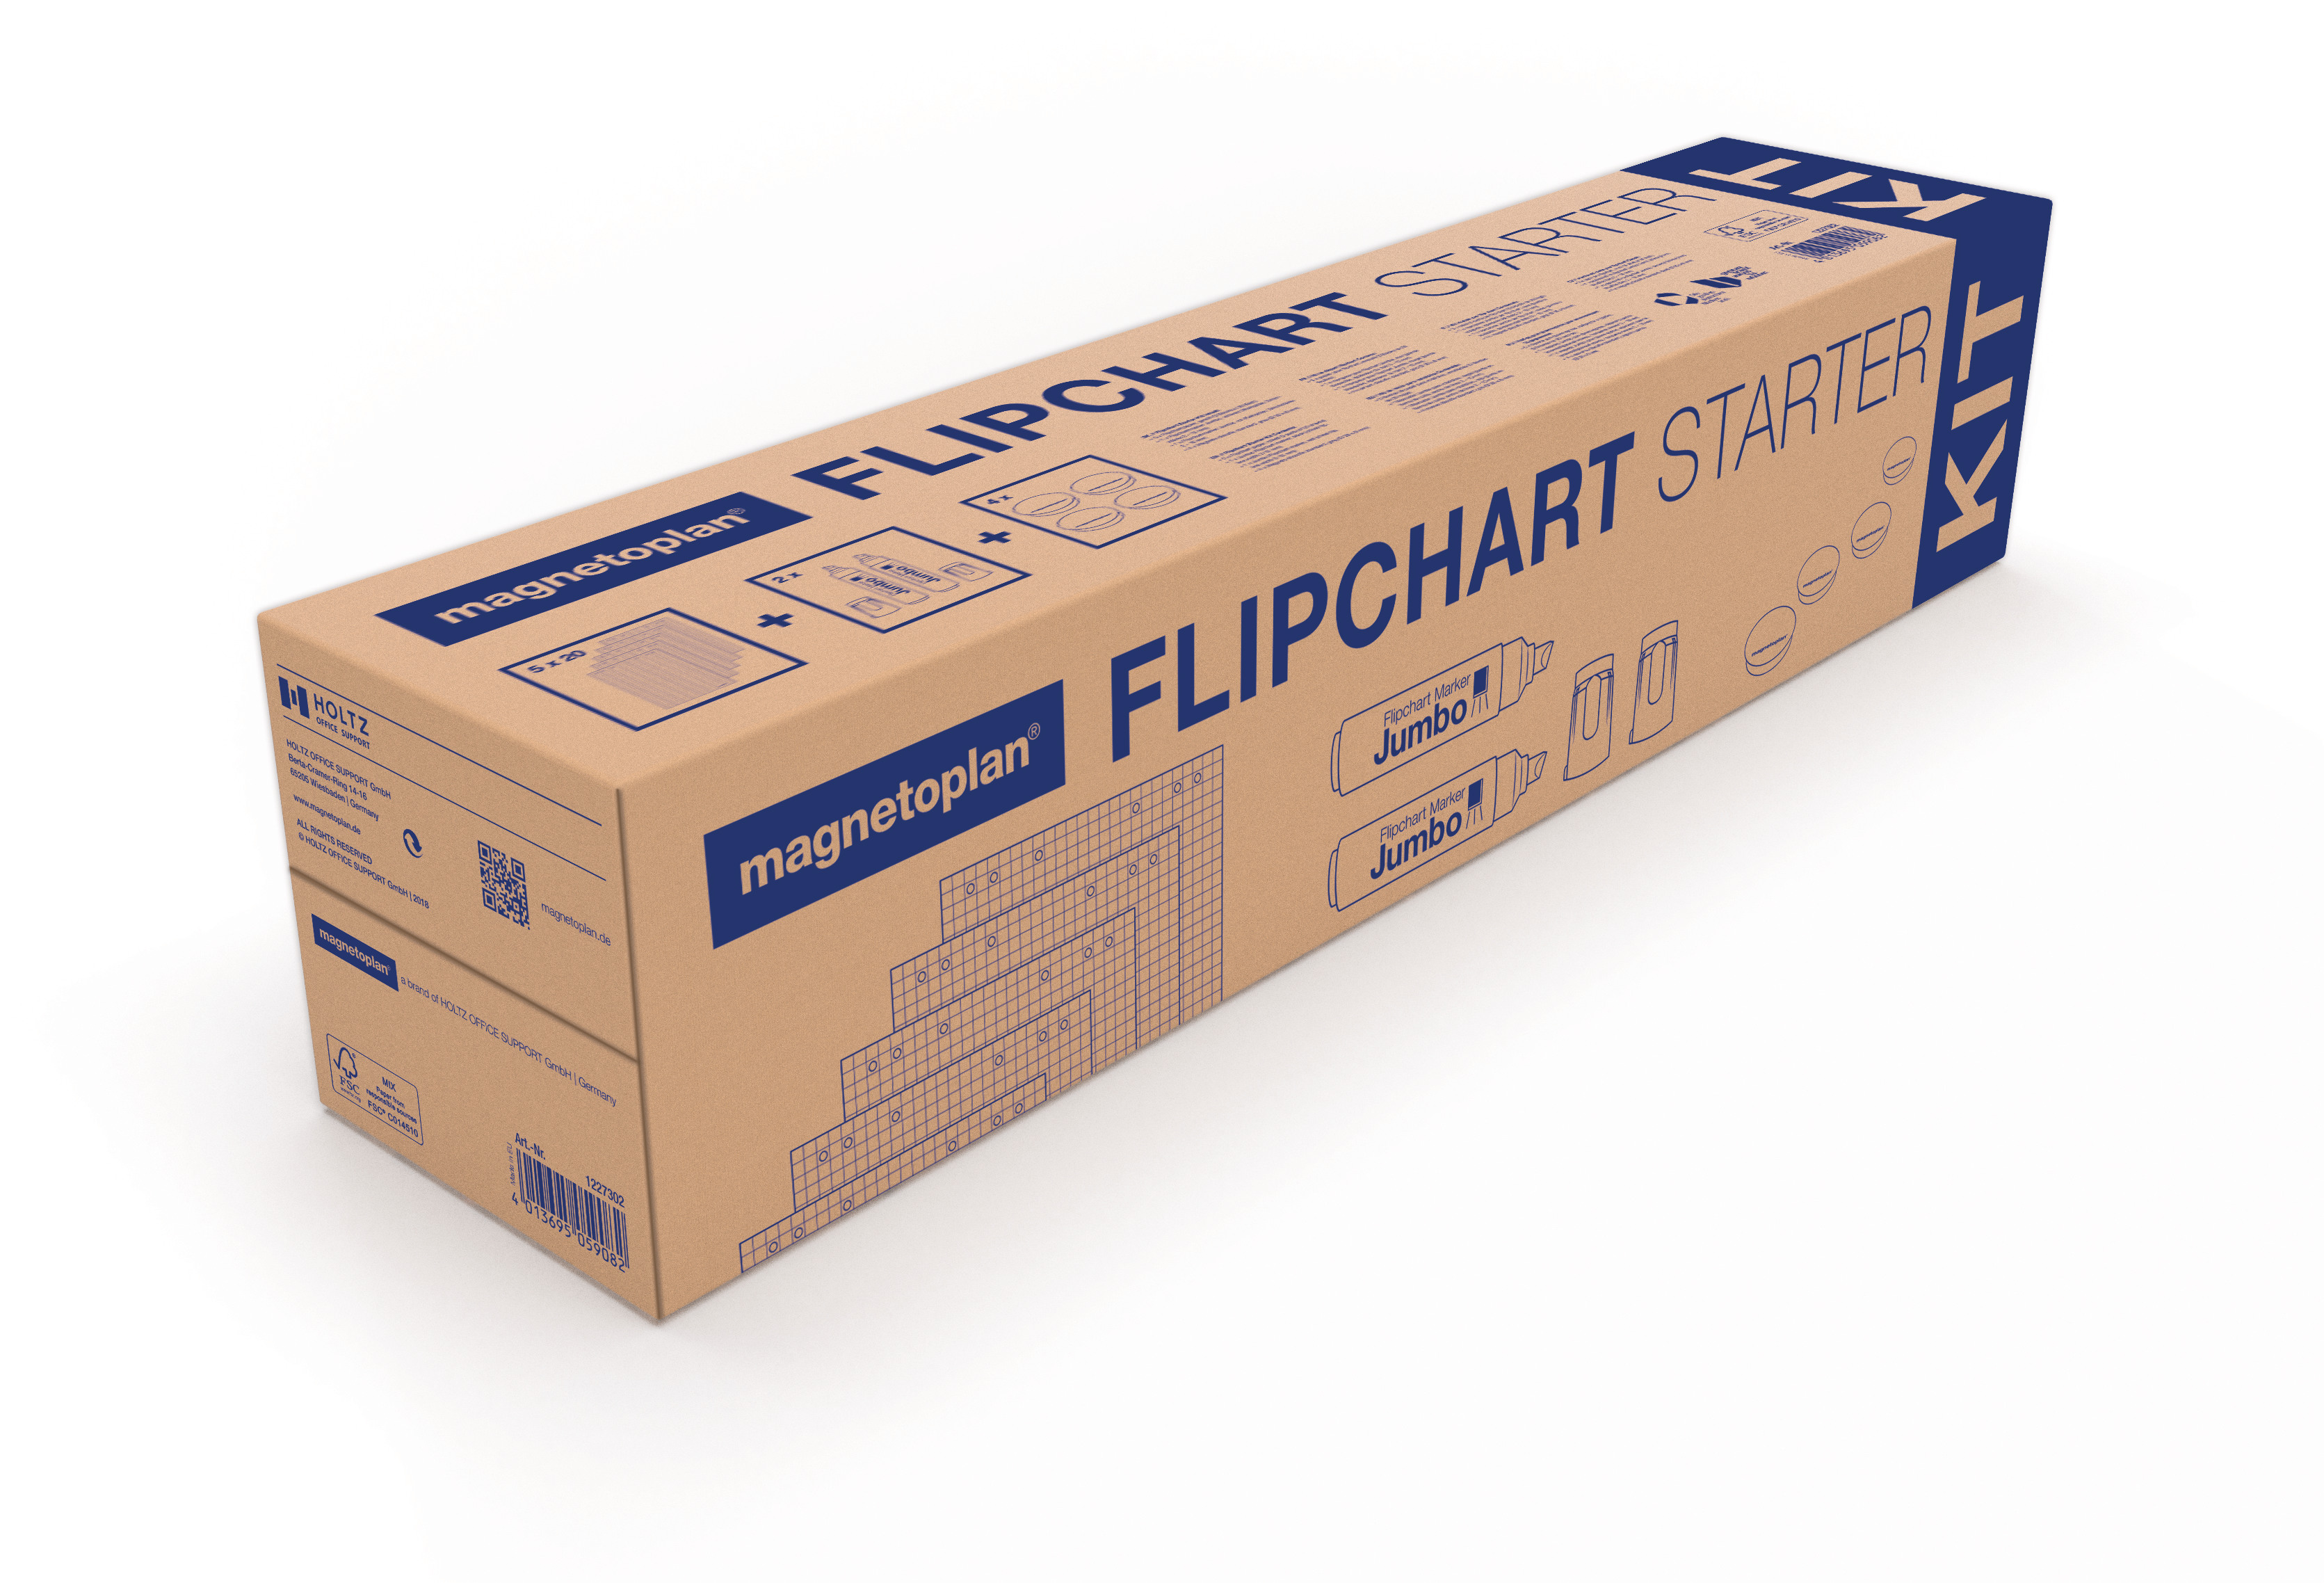 MAGNETOPLAN Flipchart Starter Kit 1227302 4 pcs.